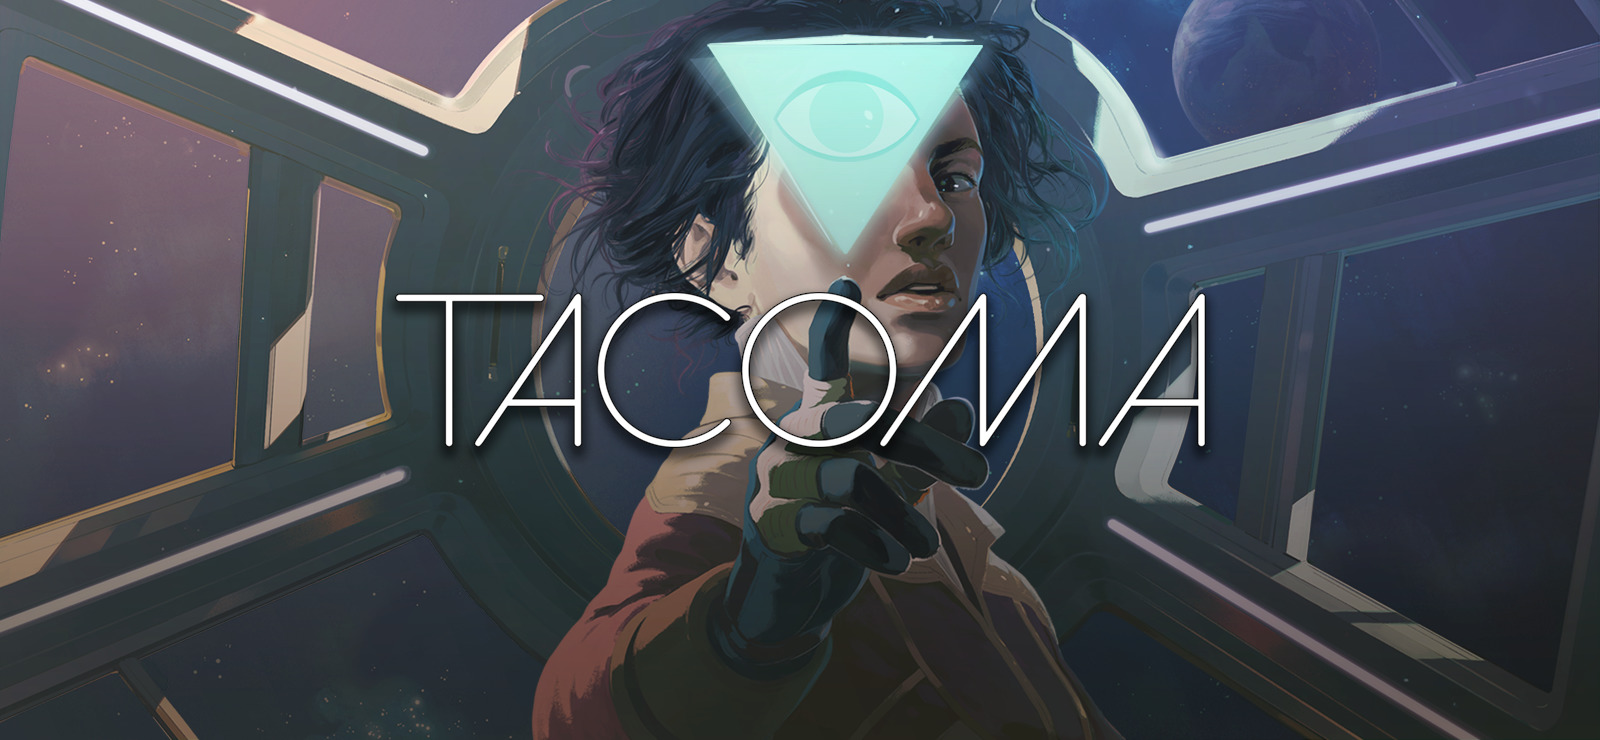 Tacoma - Metacritic